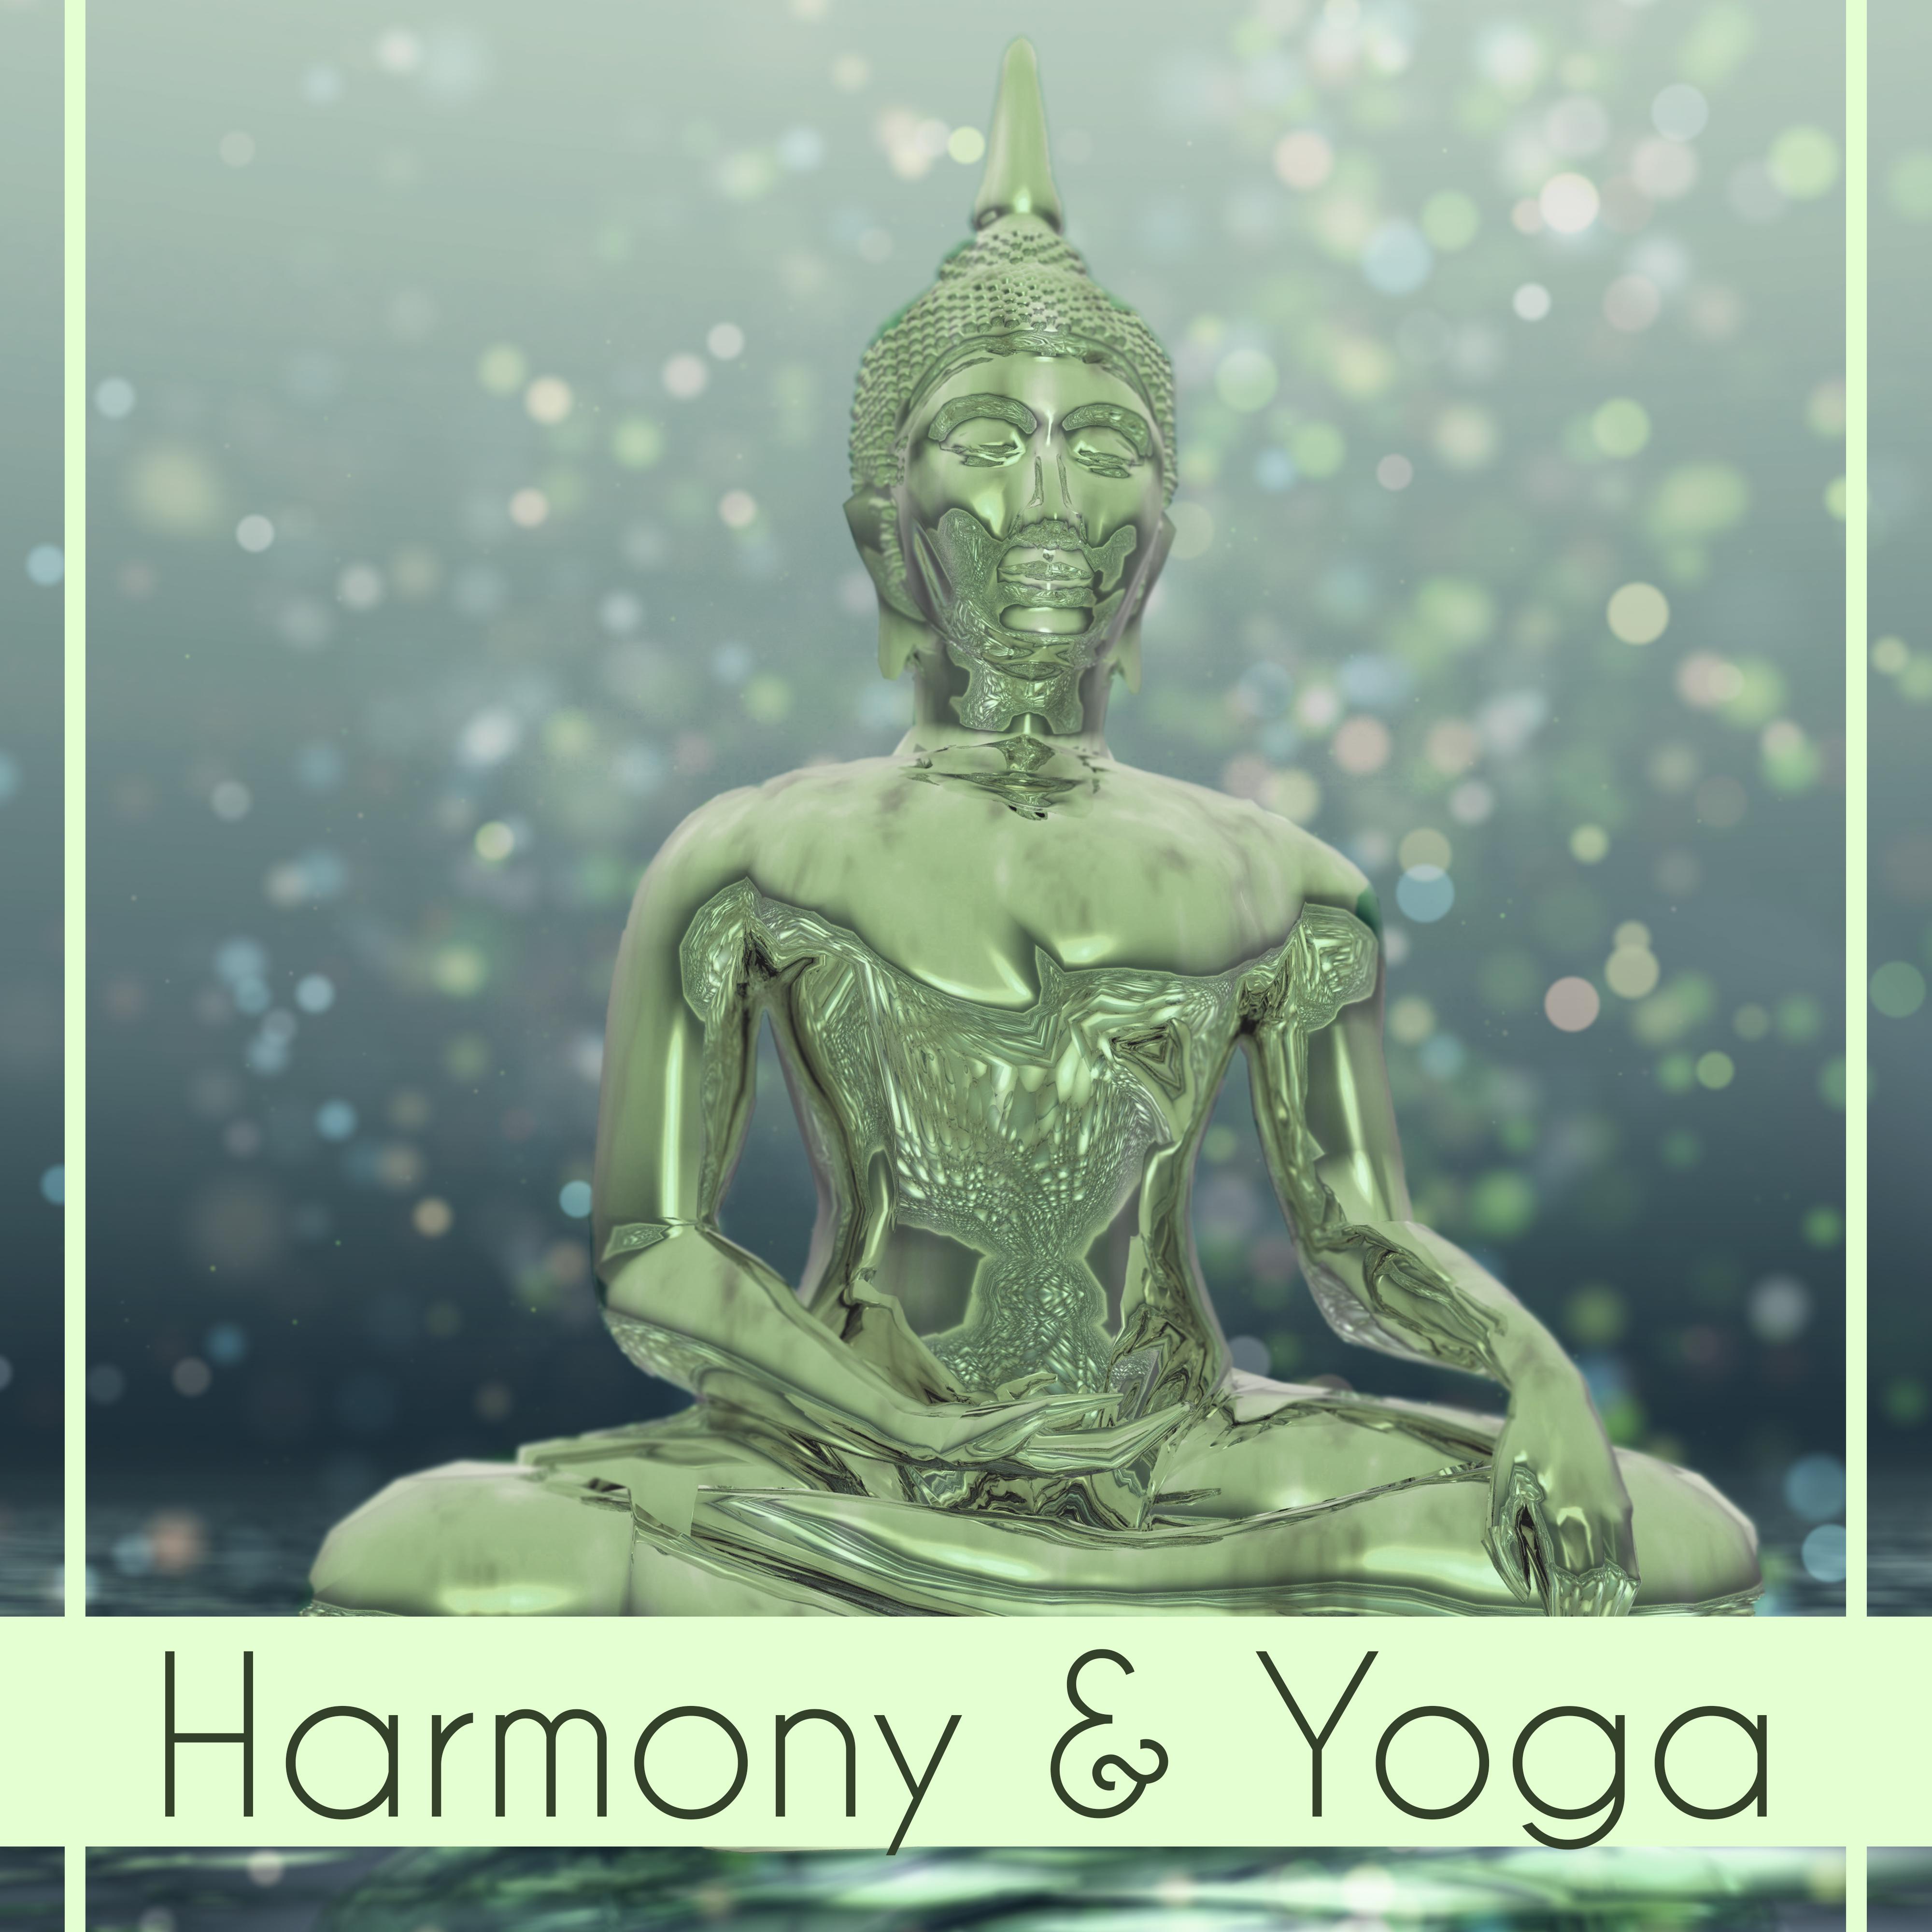 Harmony & Yoga – Meditation Music, Zen, Training Yoga, Peaceful Music for Relief, Clear Mind, Calmness